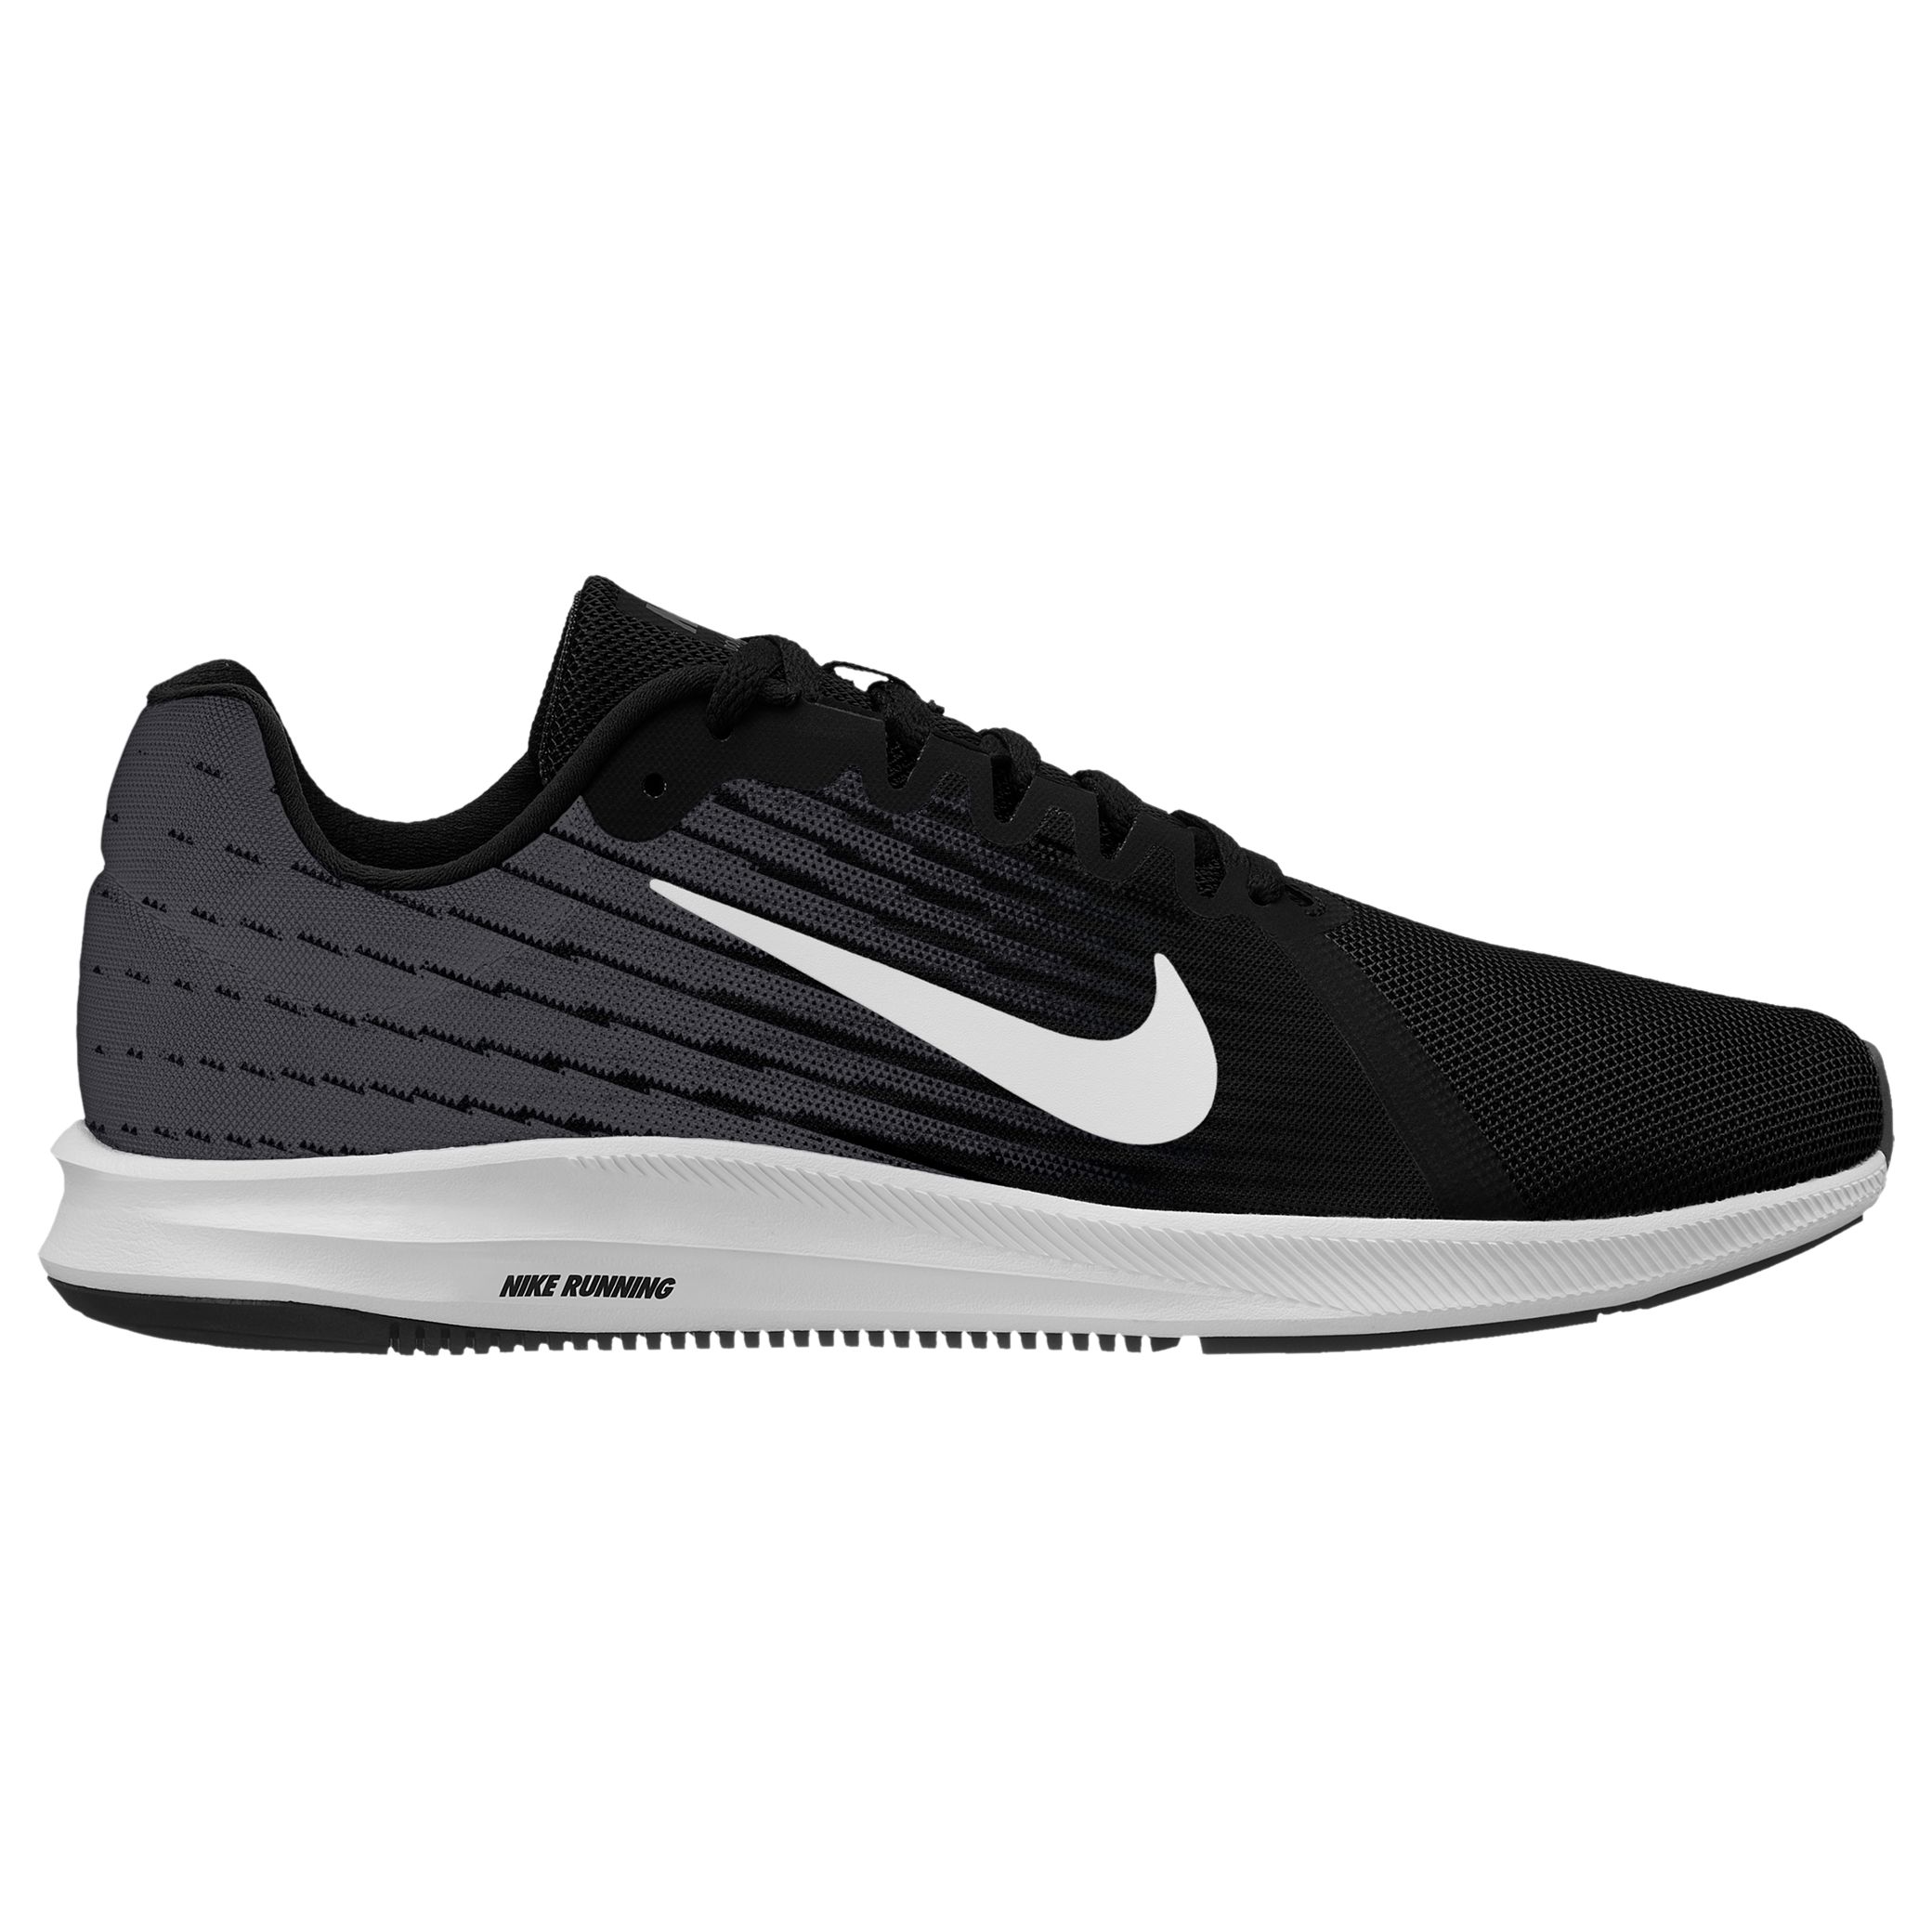 Nike Downshifter 8 Men's Running Shoes, Black